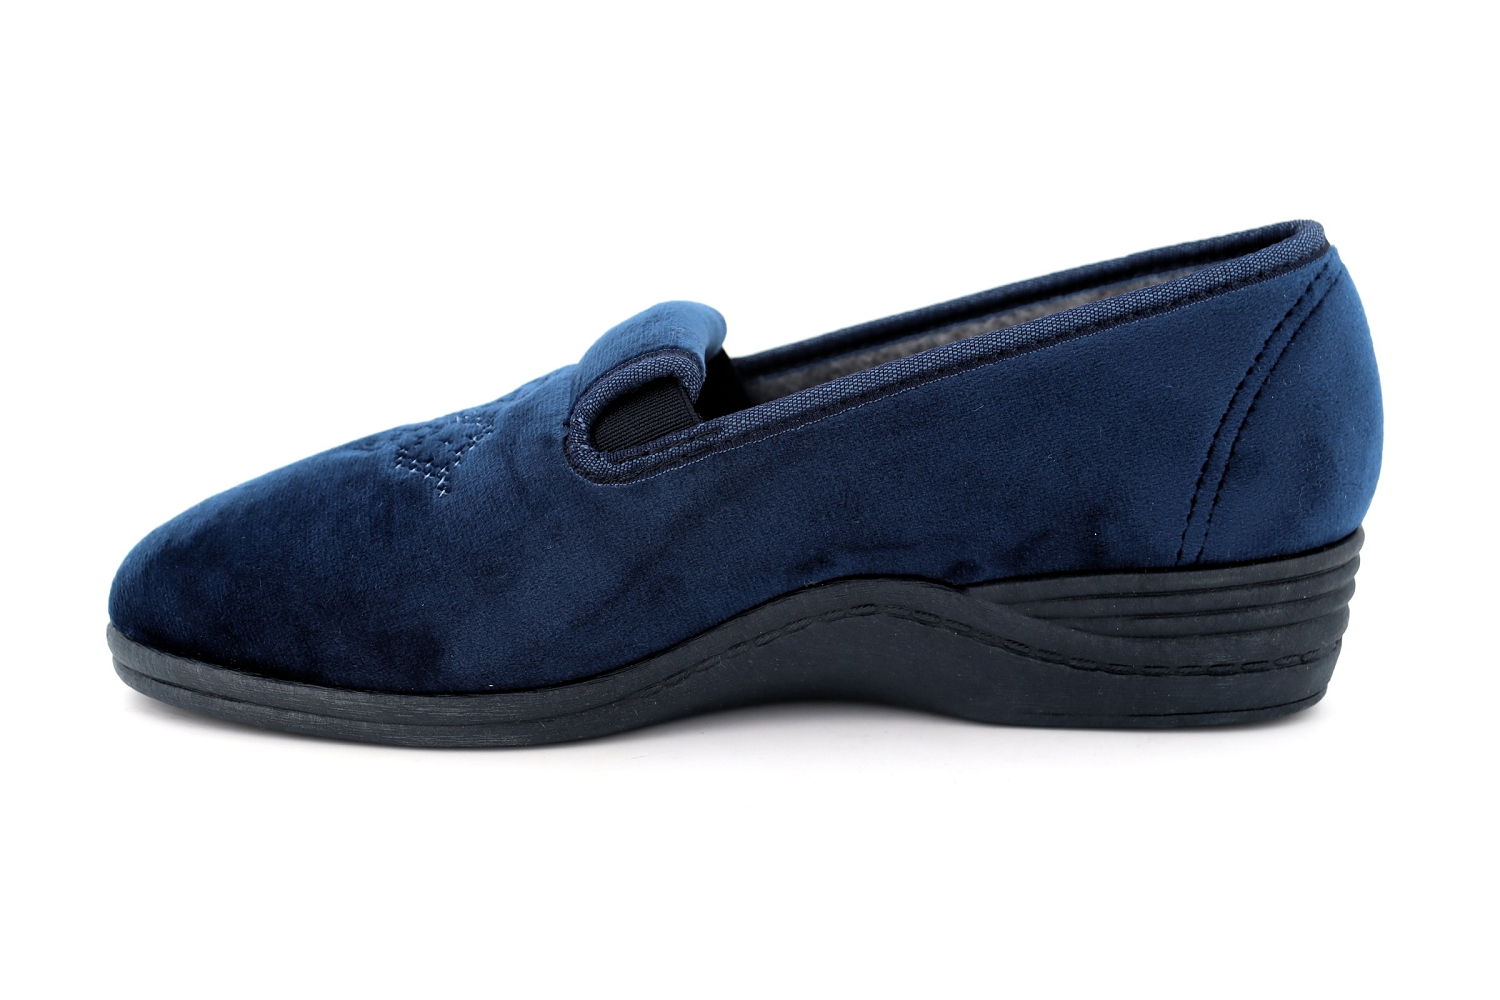 Pantoufle - OUT OF THE BLUE - Géante Range-Chaussons Welcome - Feutre -  Pointure et coloris assorties Gris Assorties - Cdiscount Chaussures